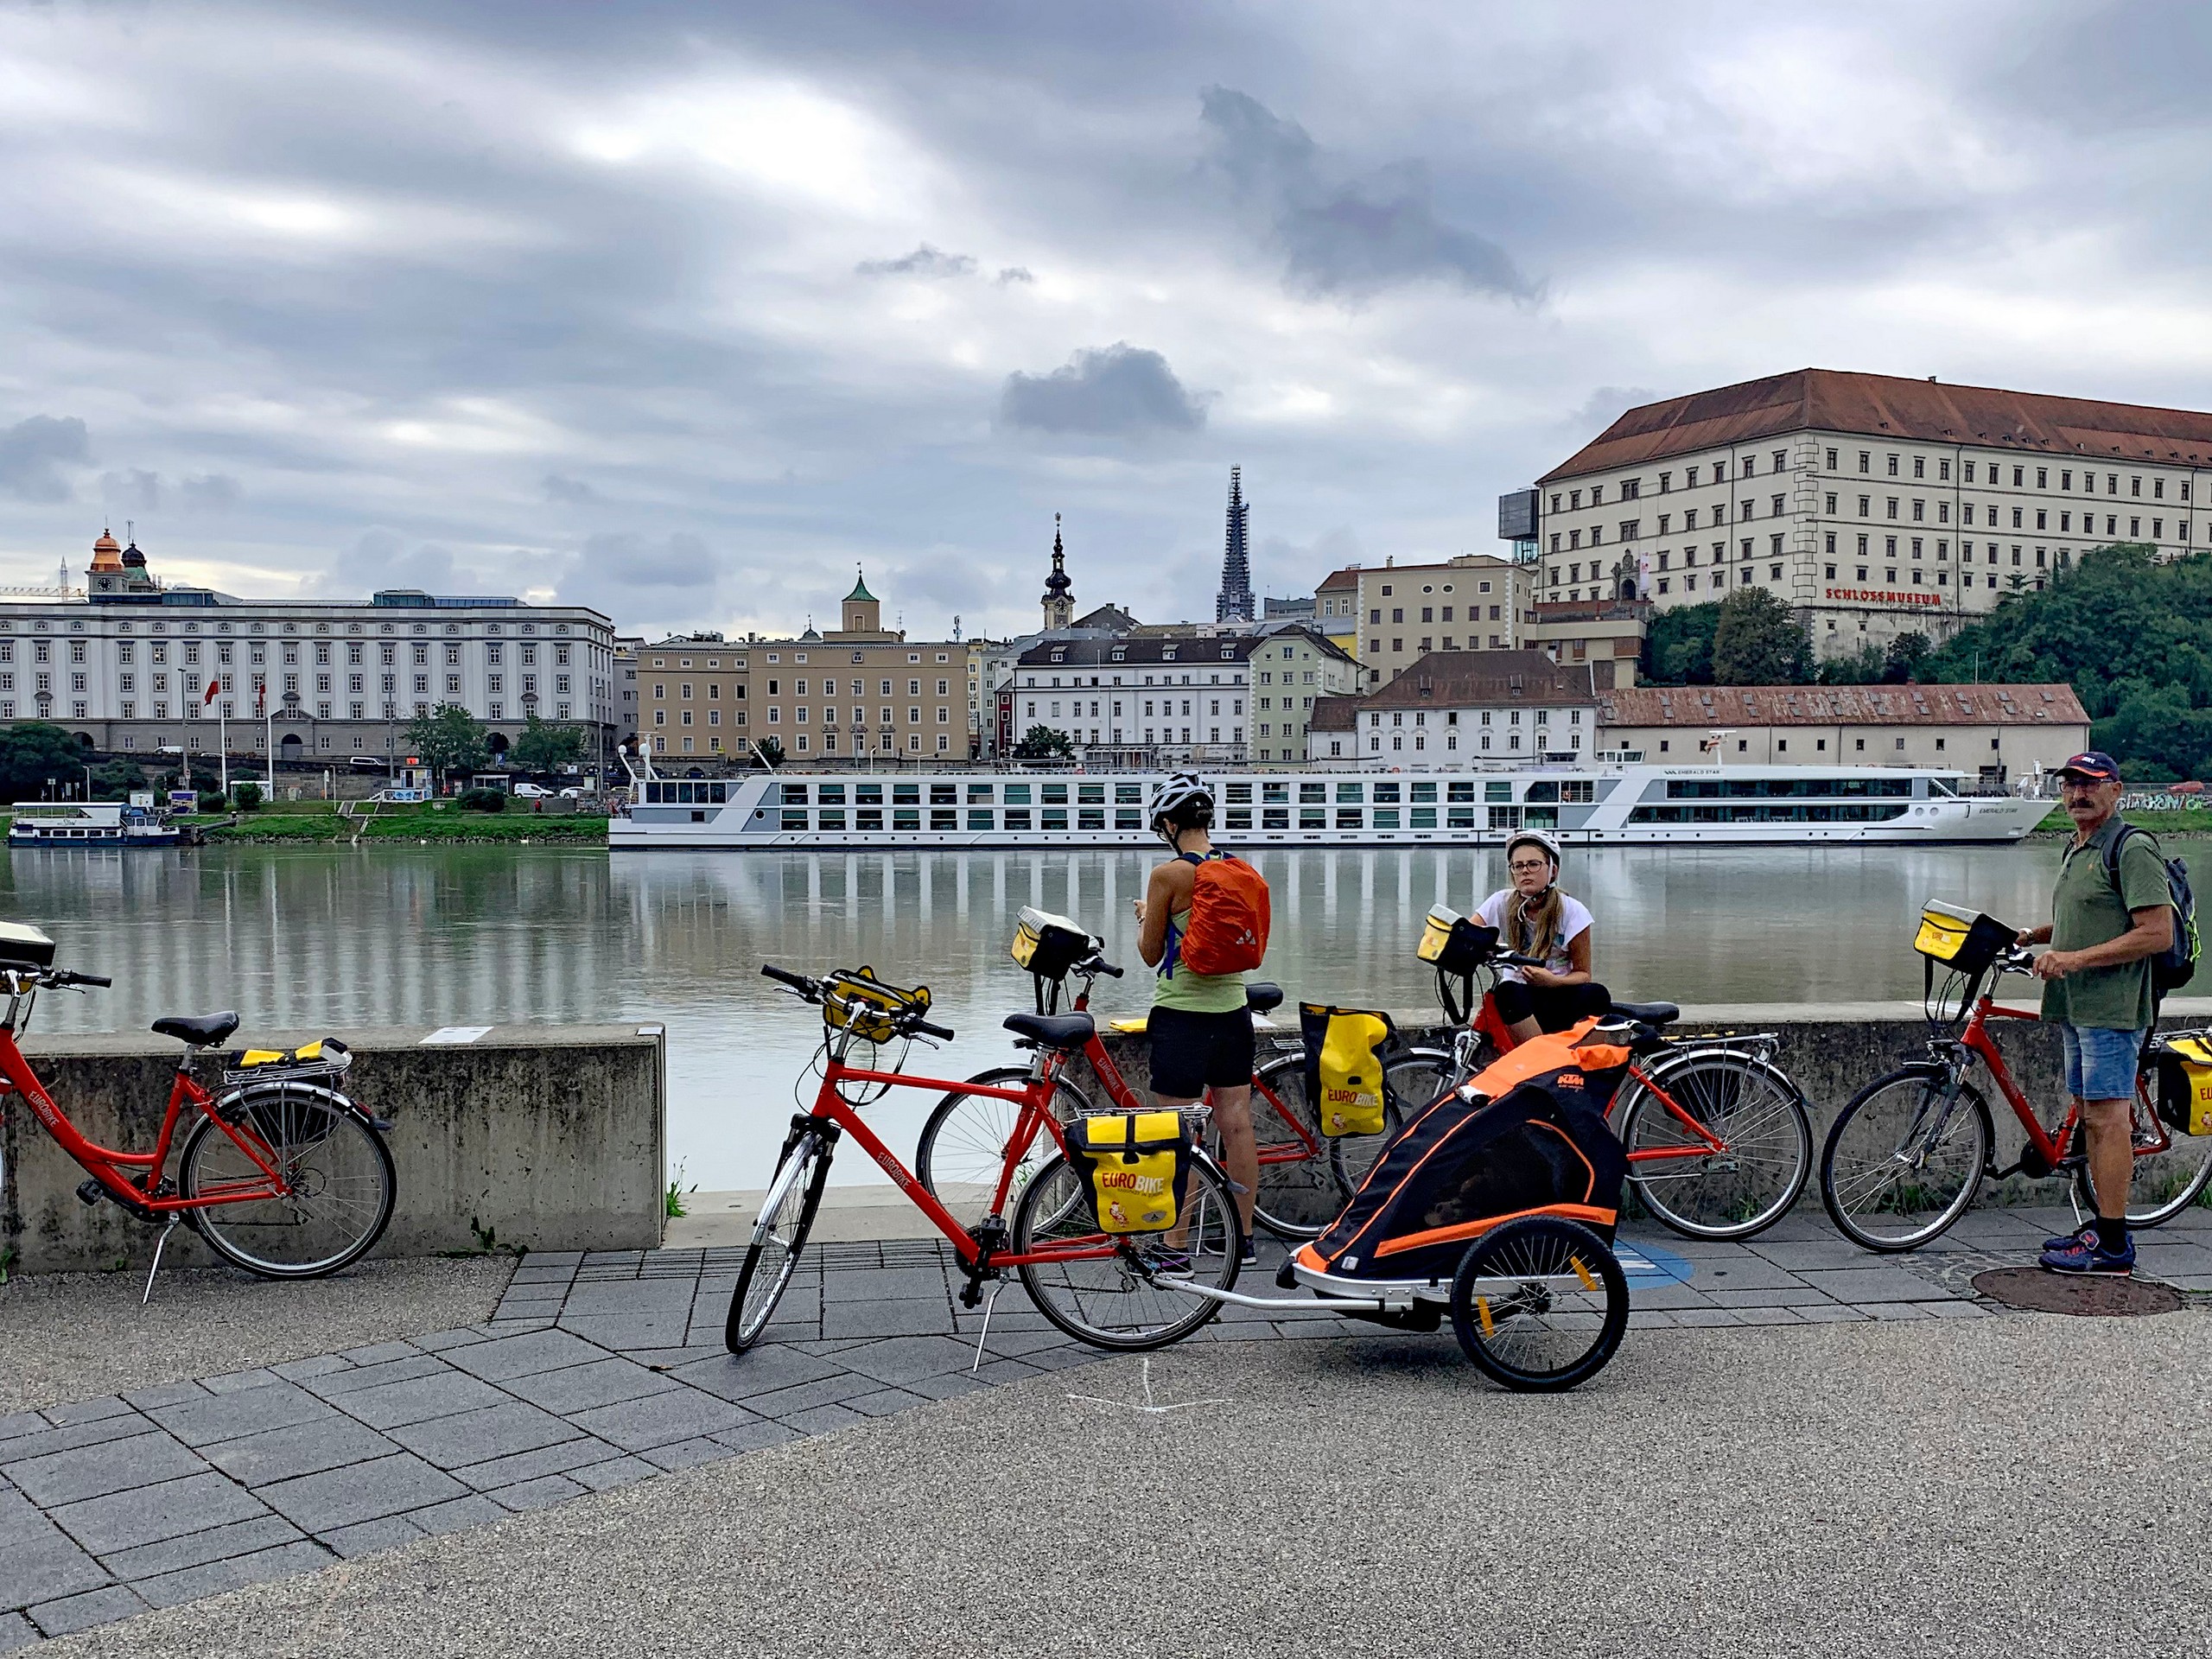 Bikers near Danube river